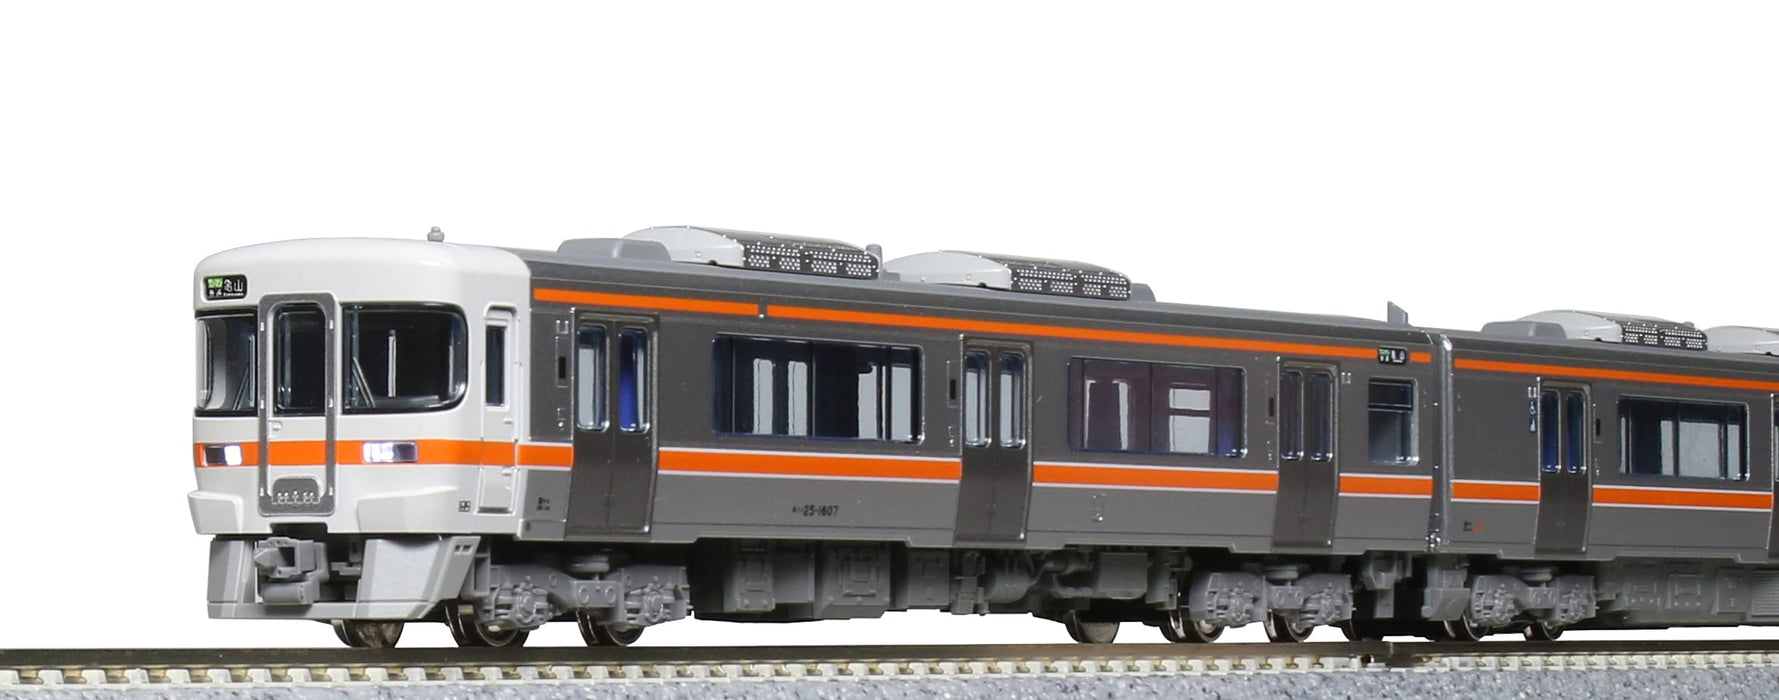 Kato N Gauge Kiha 25 Diesel Railway Model 2-Car Set 1500 Series Kisei/Sangu Line